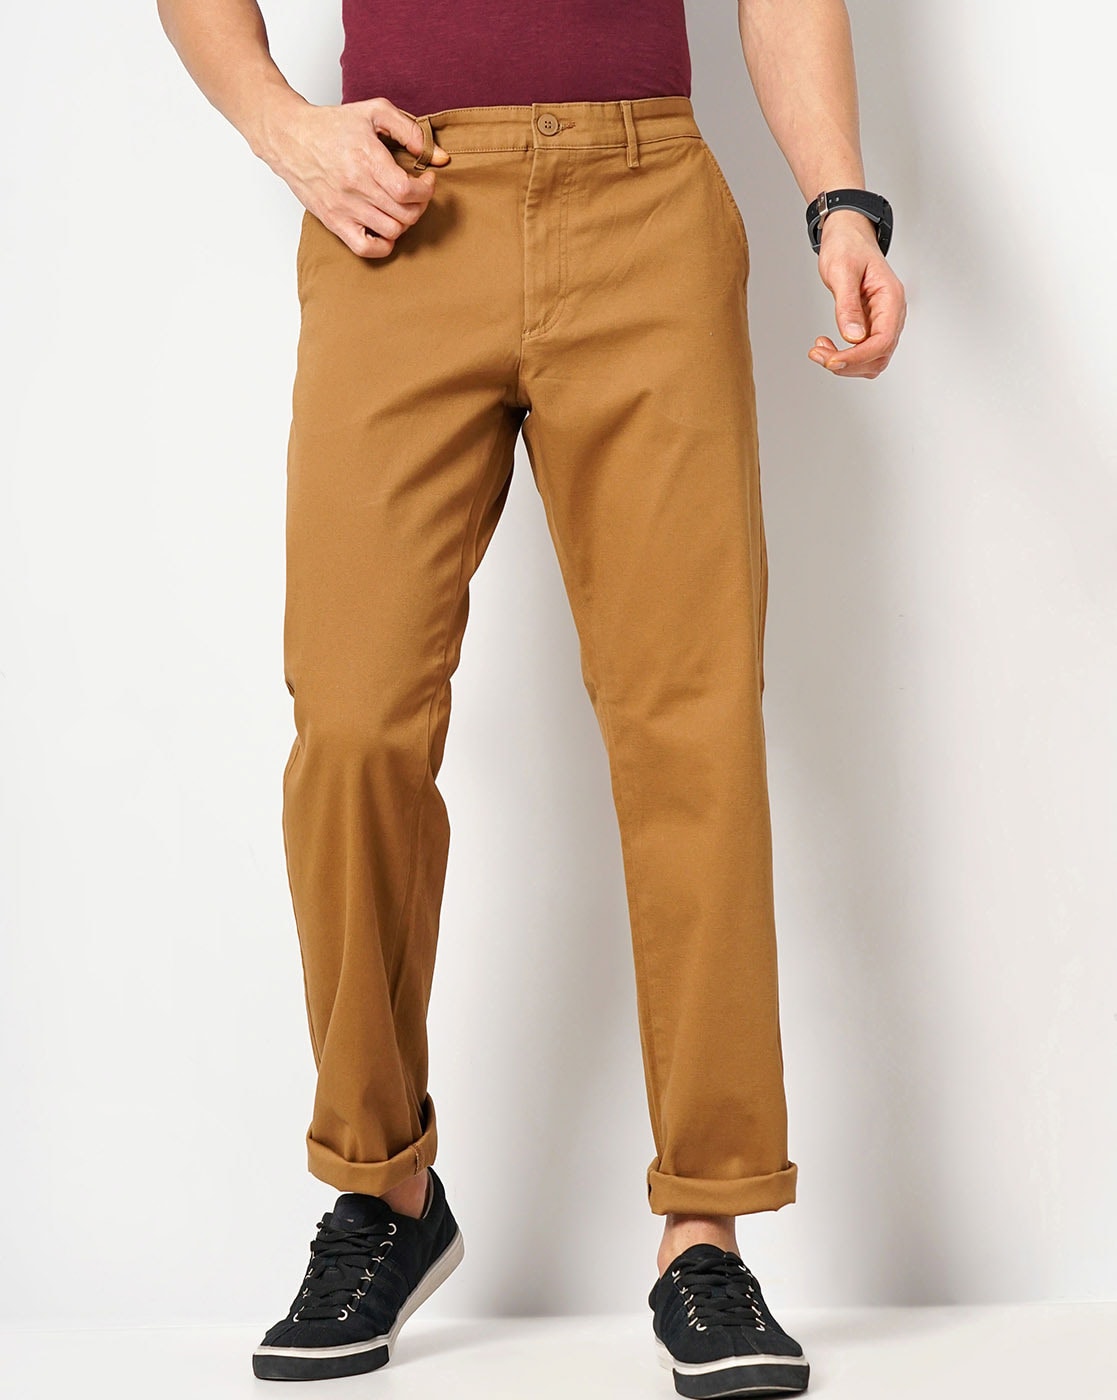 Buy Check Trousers For Men Online | Celio